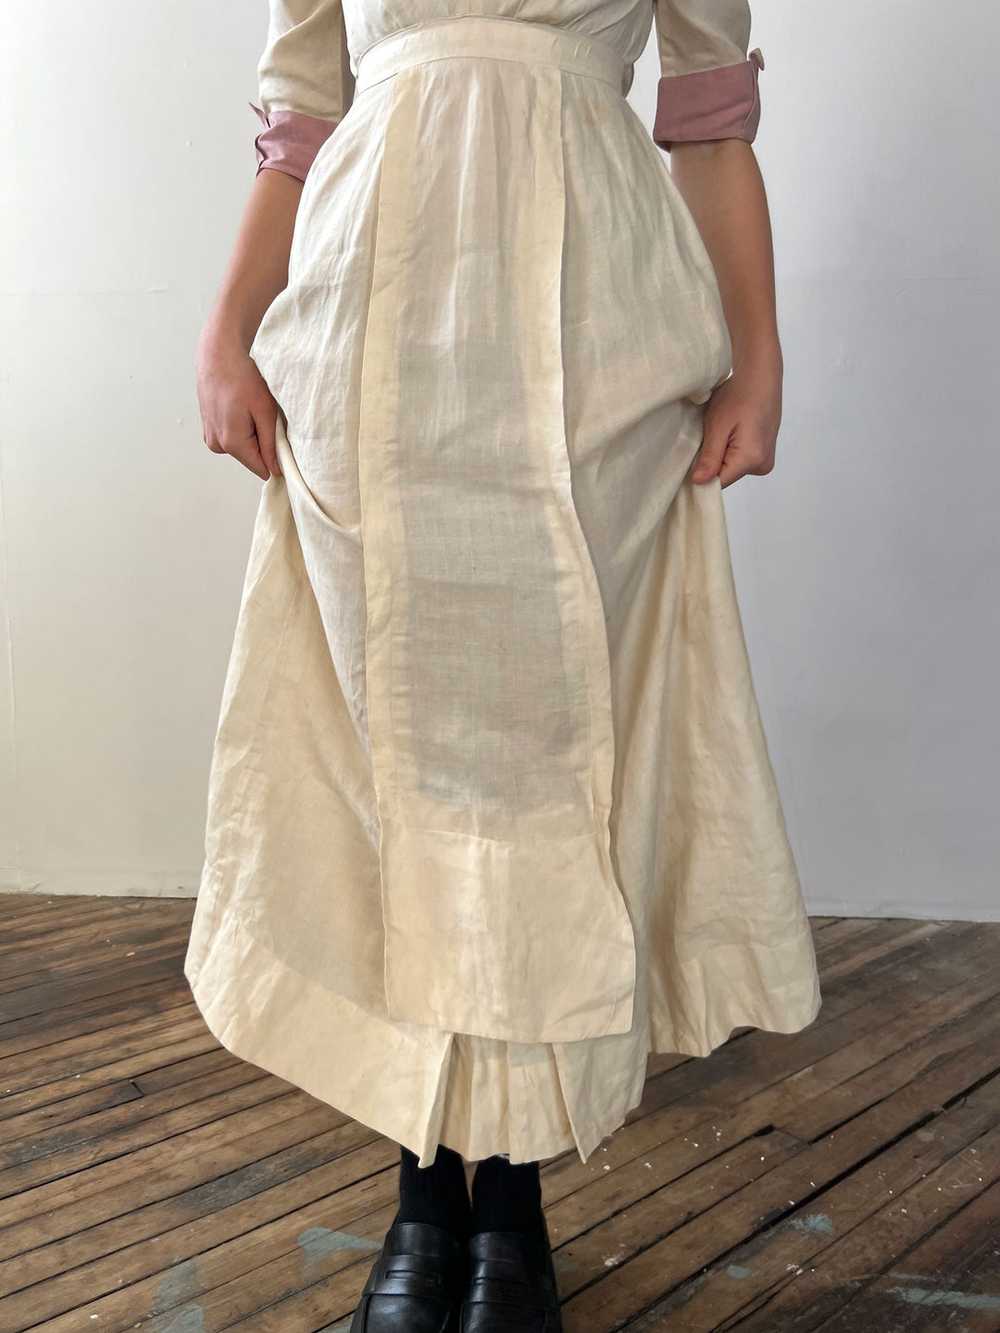 Antique Edwardian Era Cream Colored Linen Dress - image 2